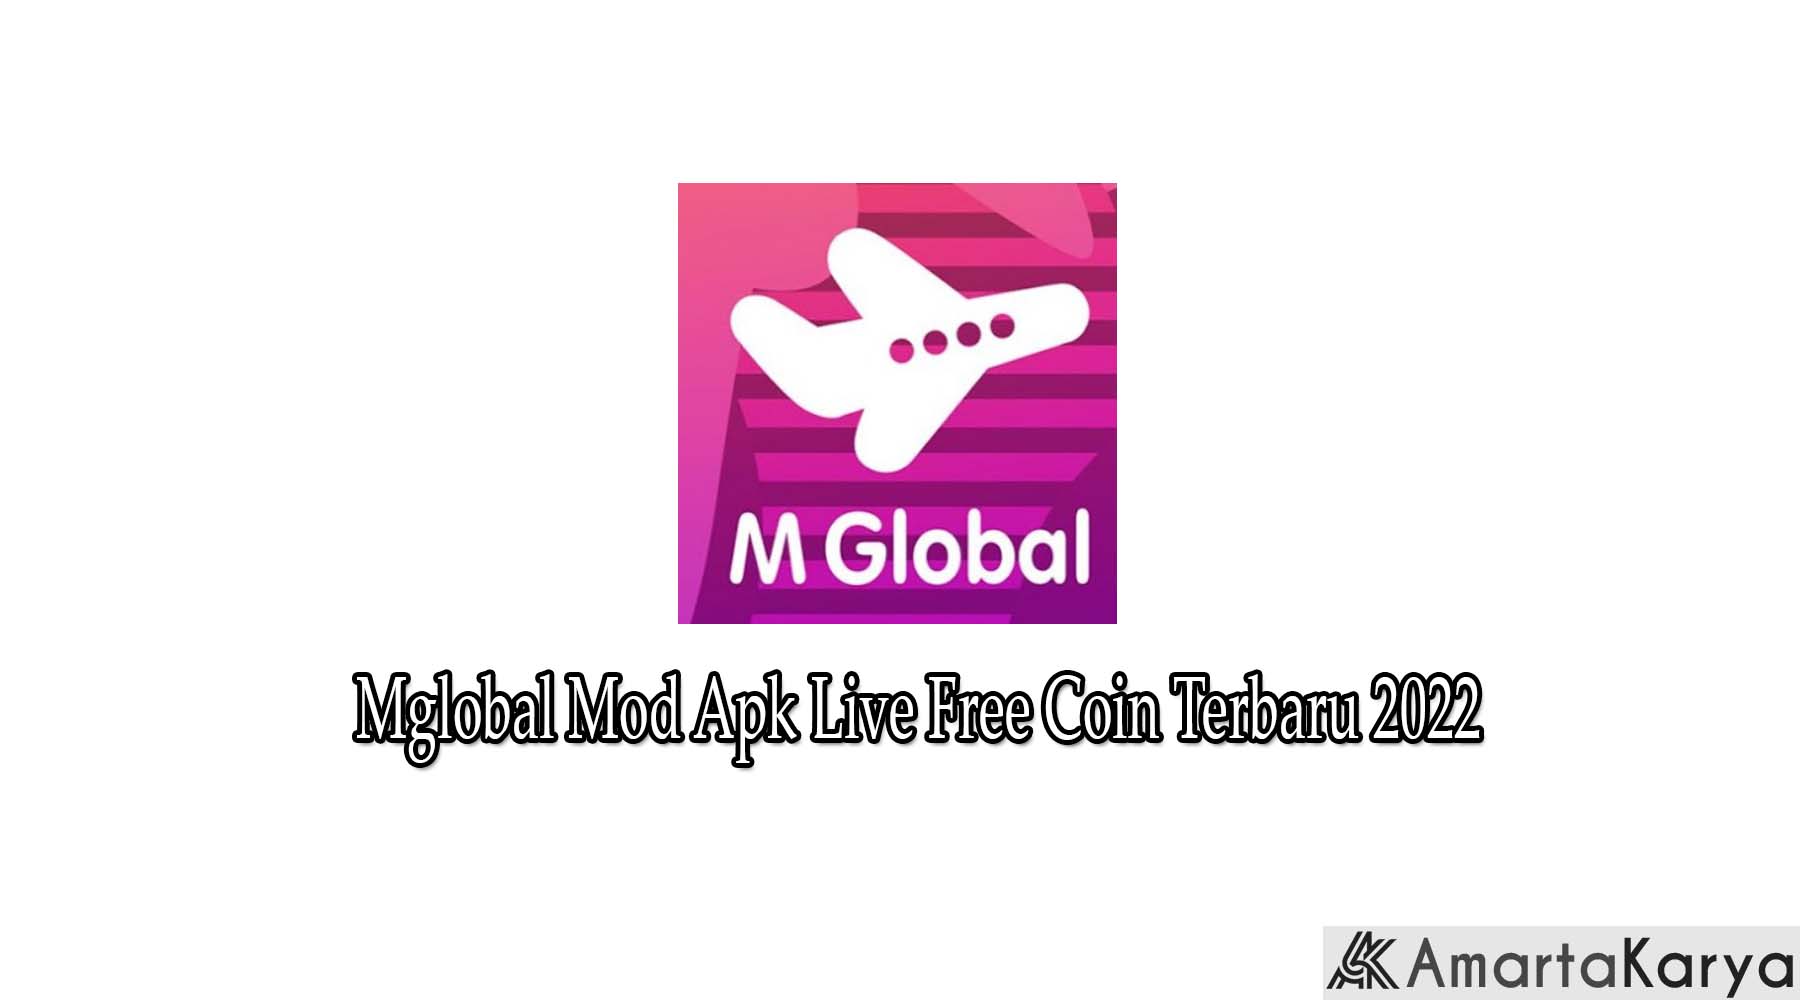 Mglobal Mod Apk Live Free Coin Terbaru 2022